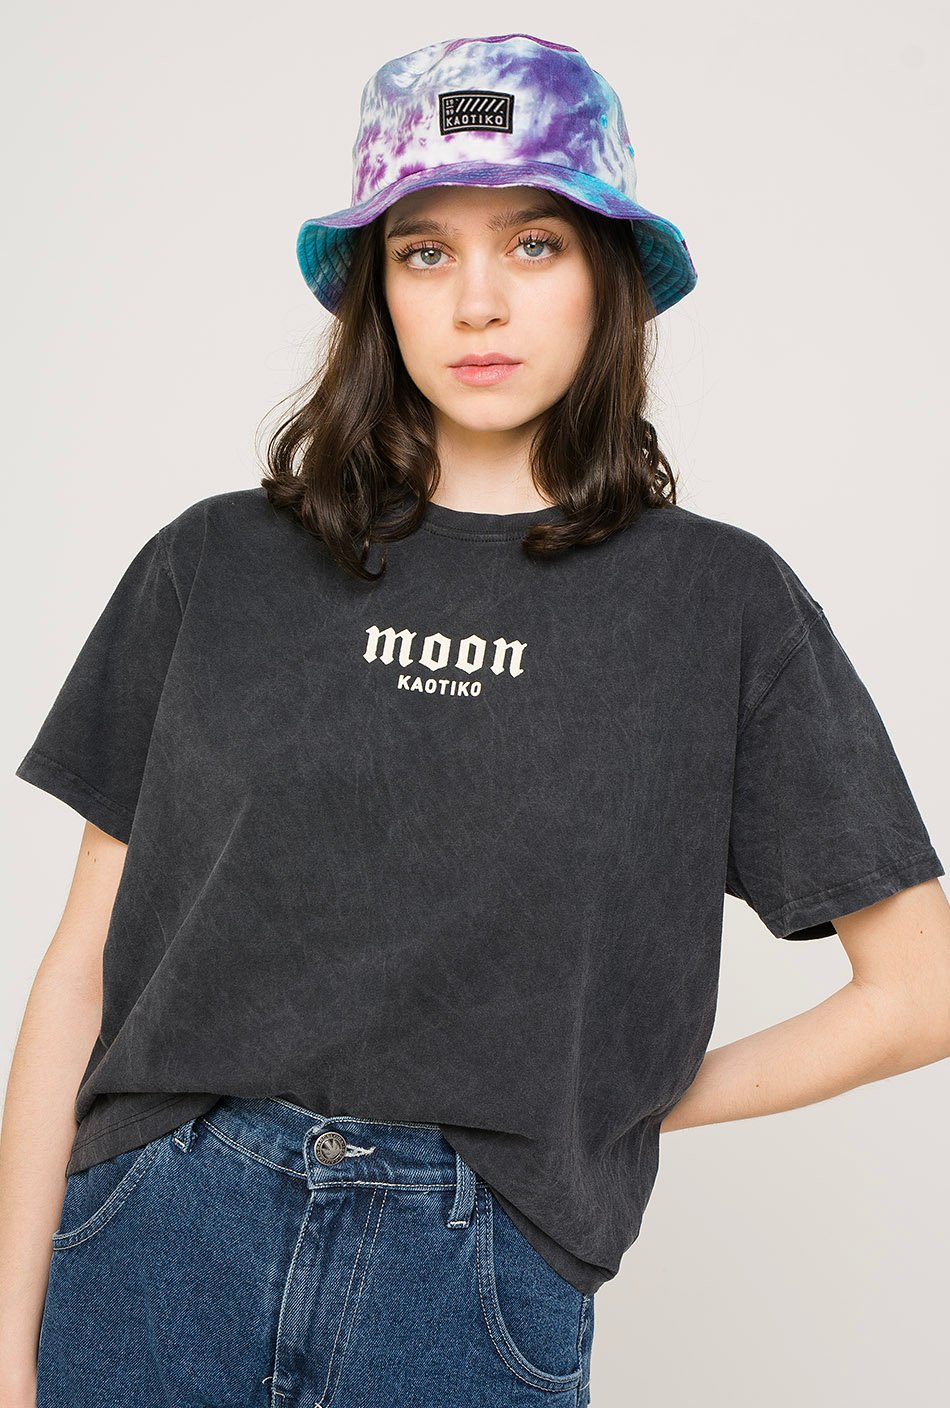 Moon Black Tie-Dye T-Shirt